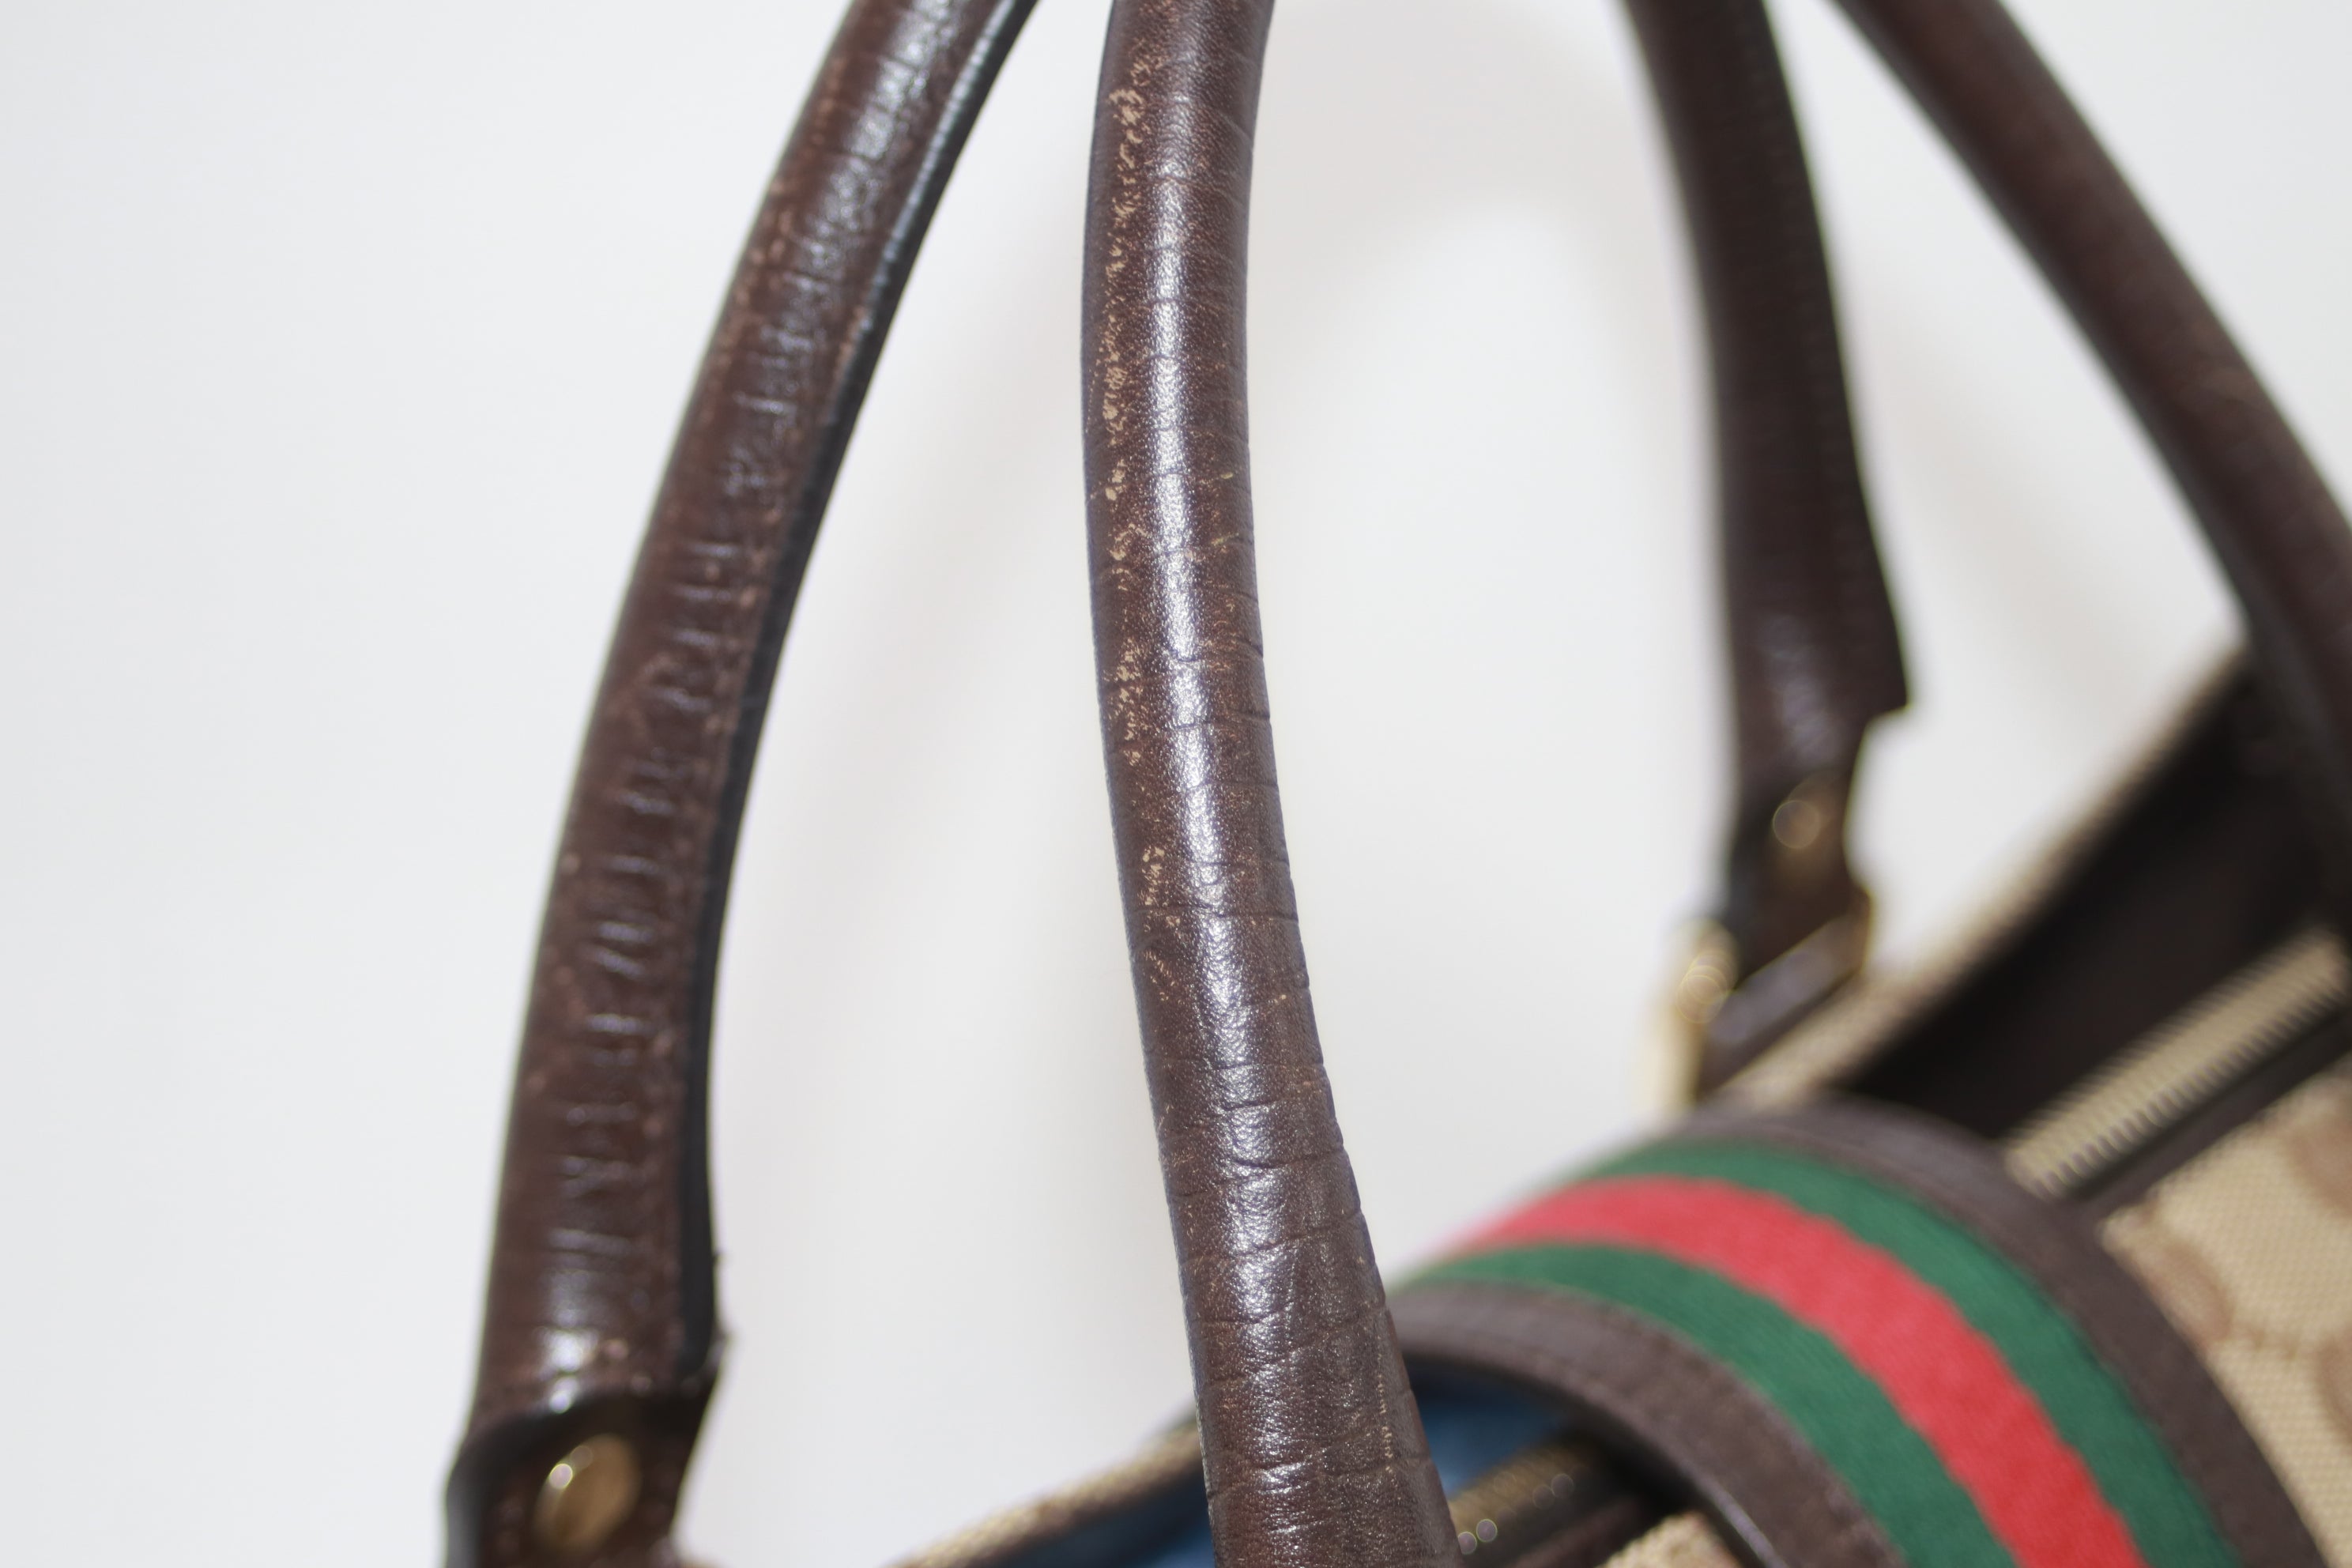 Gucci Web Shoulder Handbag Used (7771)